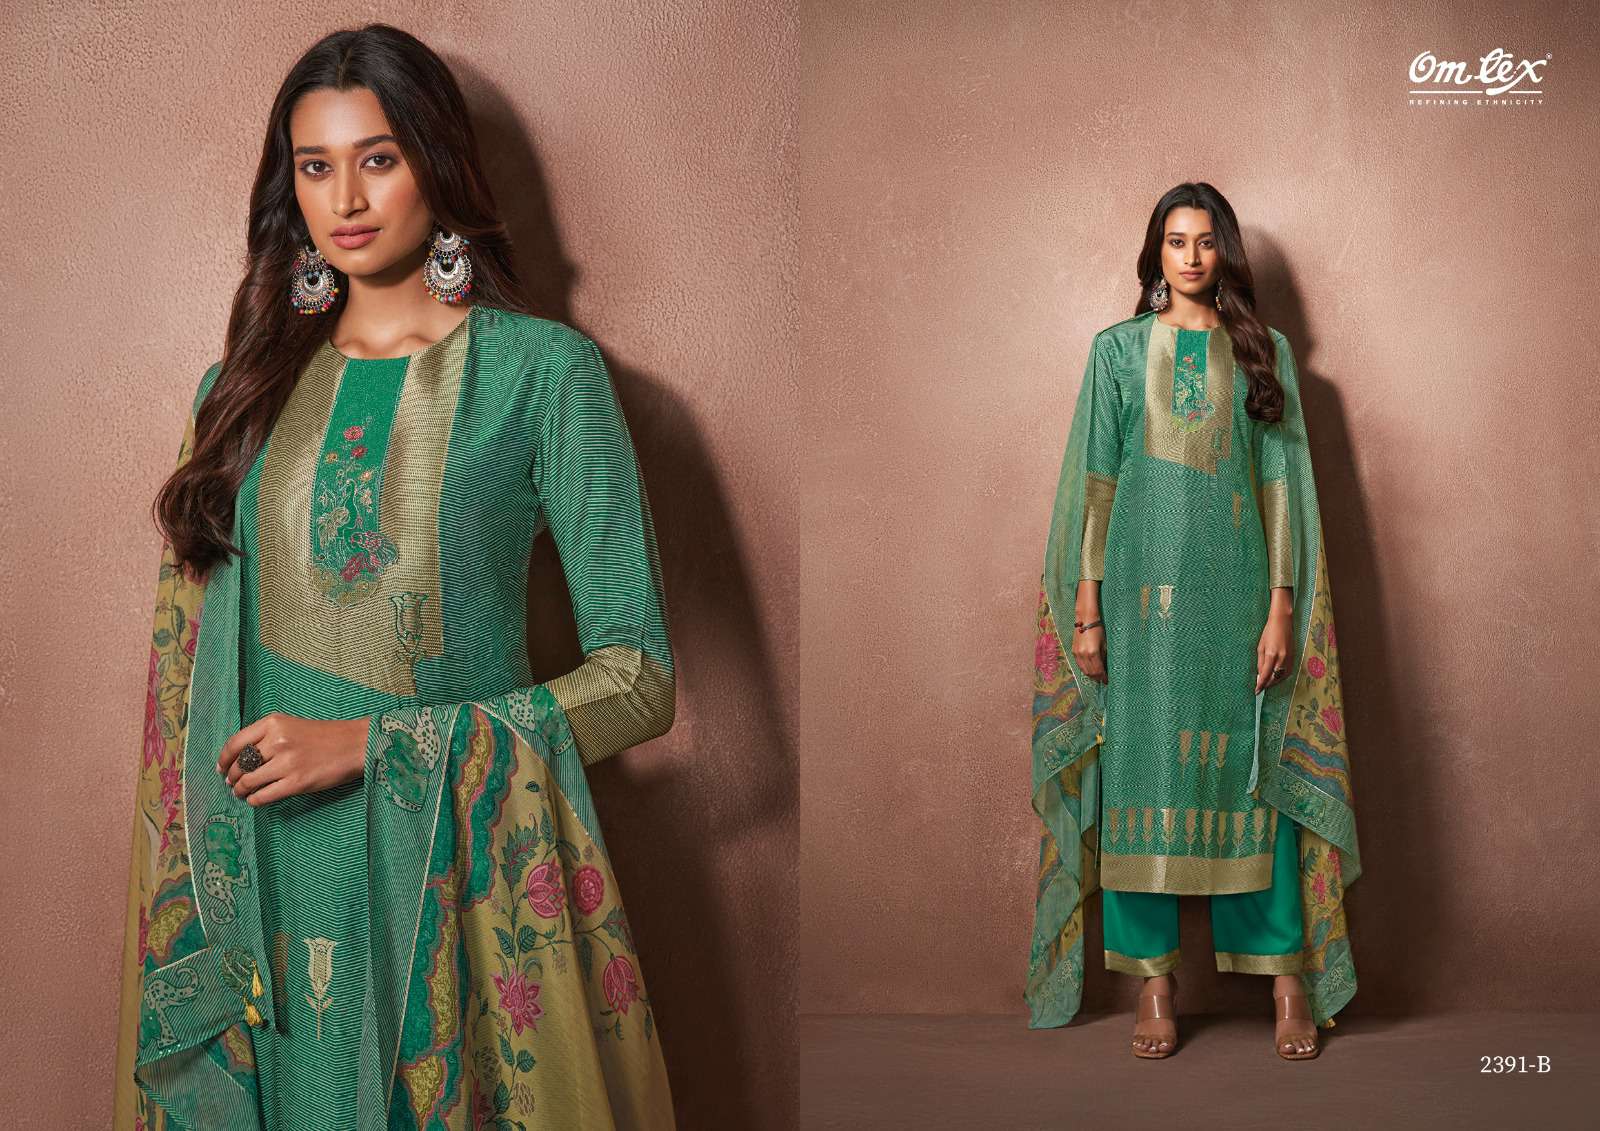 omtex anukriti 2391 colour series designer wedding pakistani salwar kameez wholesaler surat gujarat